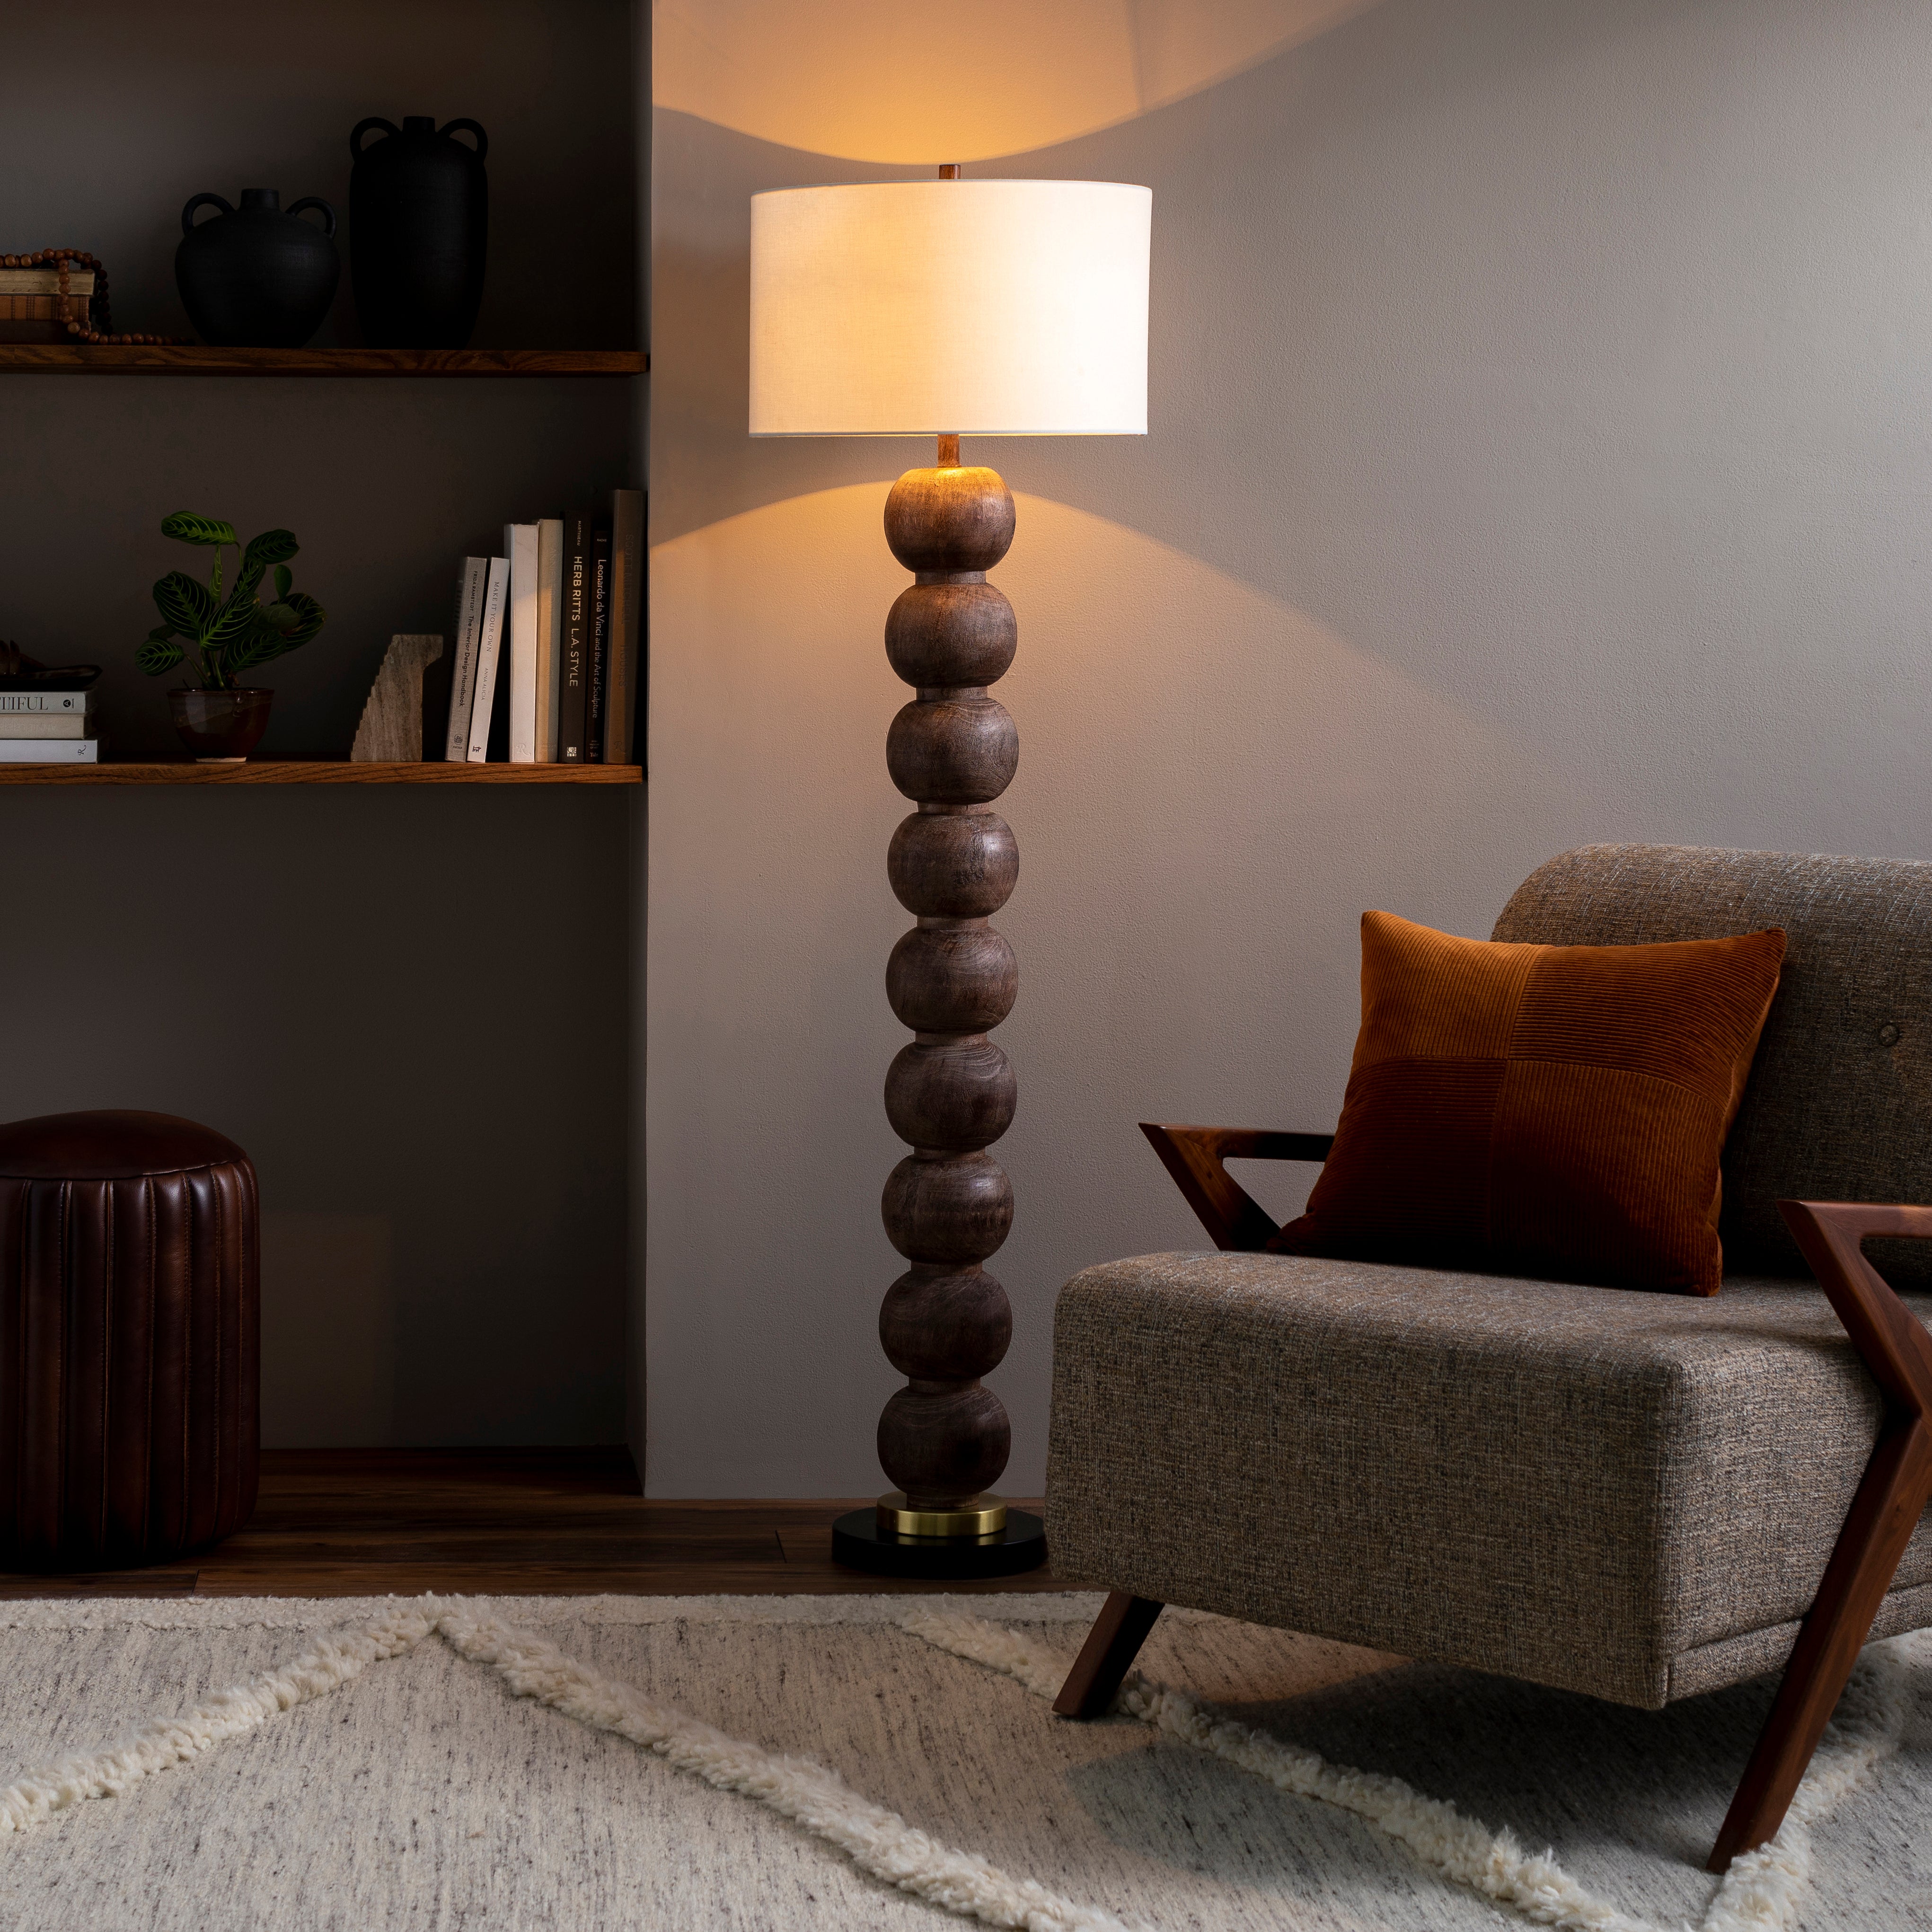 Floor Lamp in Living Room on Wall2Wall Furnishings Website